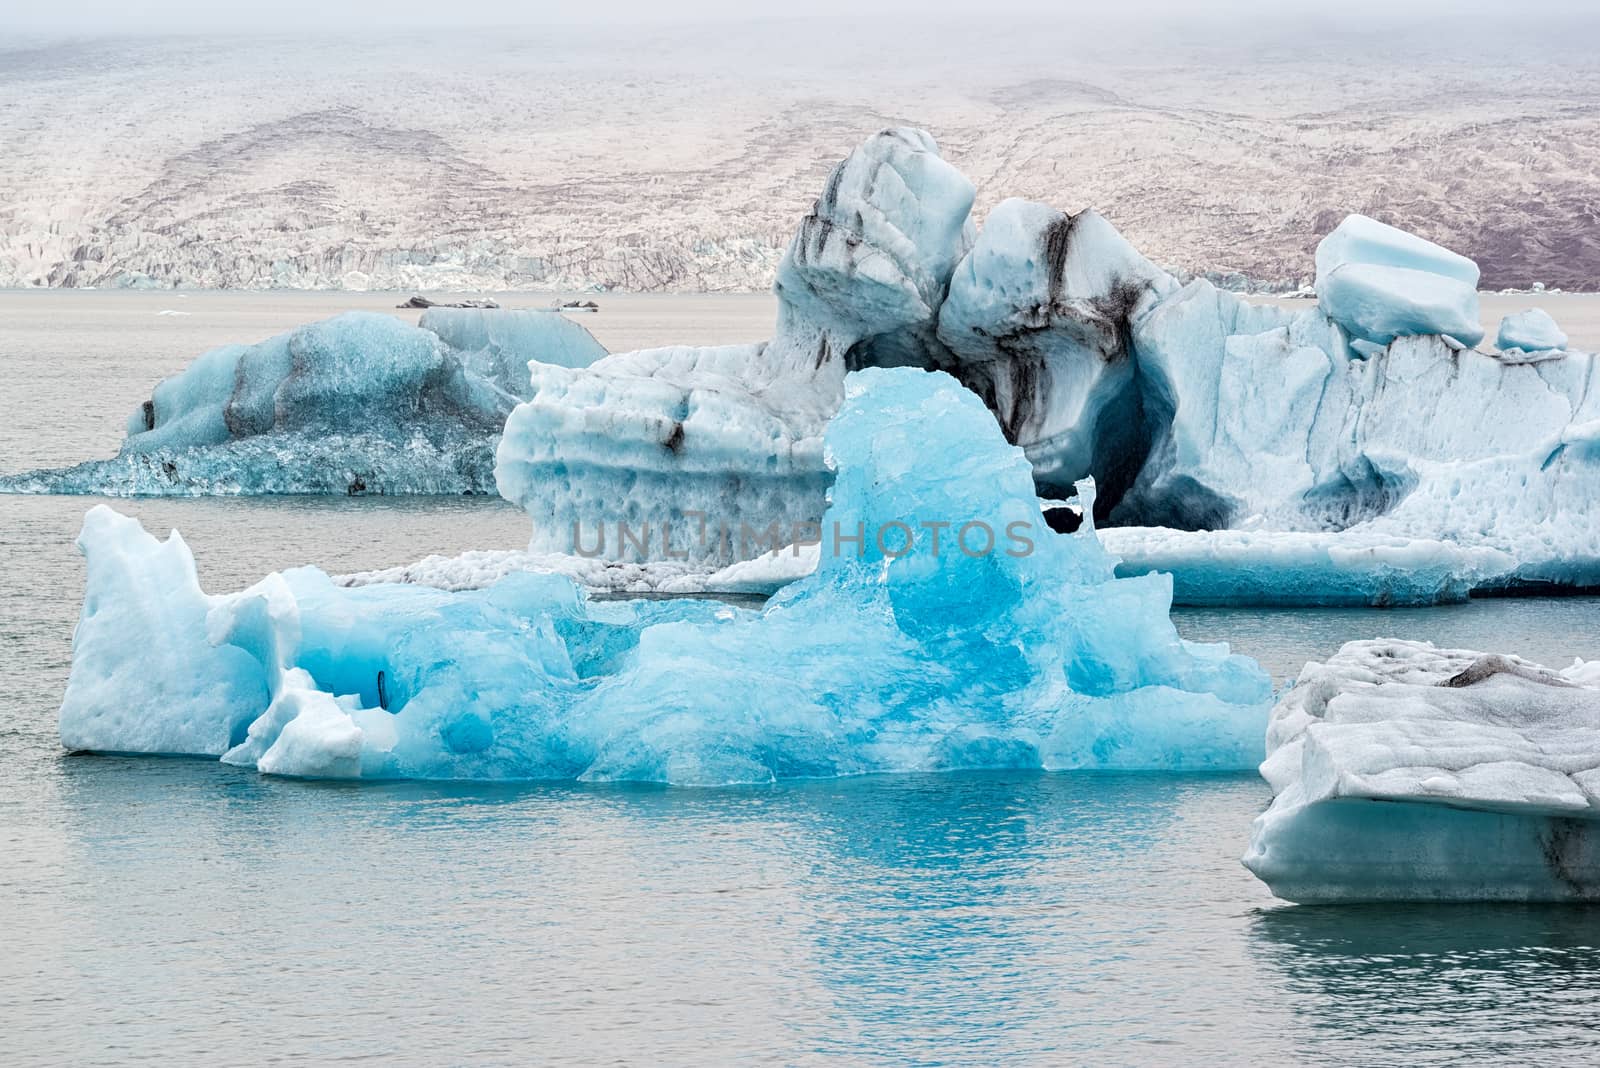 Icebergs in the Jokulsarlon's lake, Iceland by LuigiMorbidelli